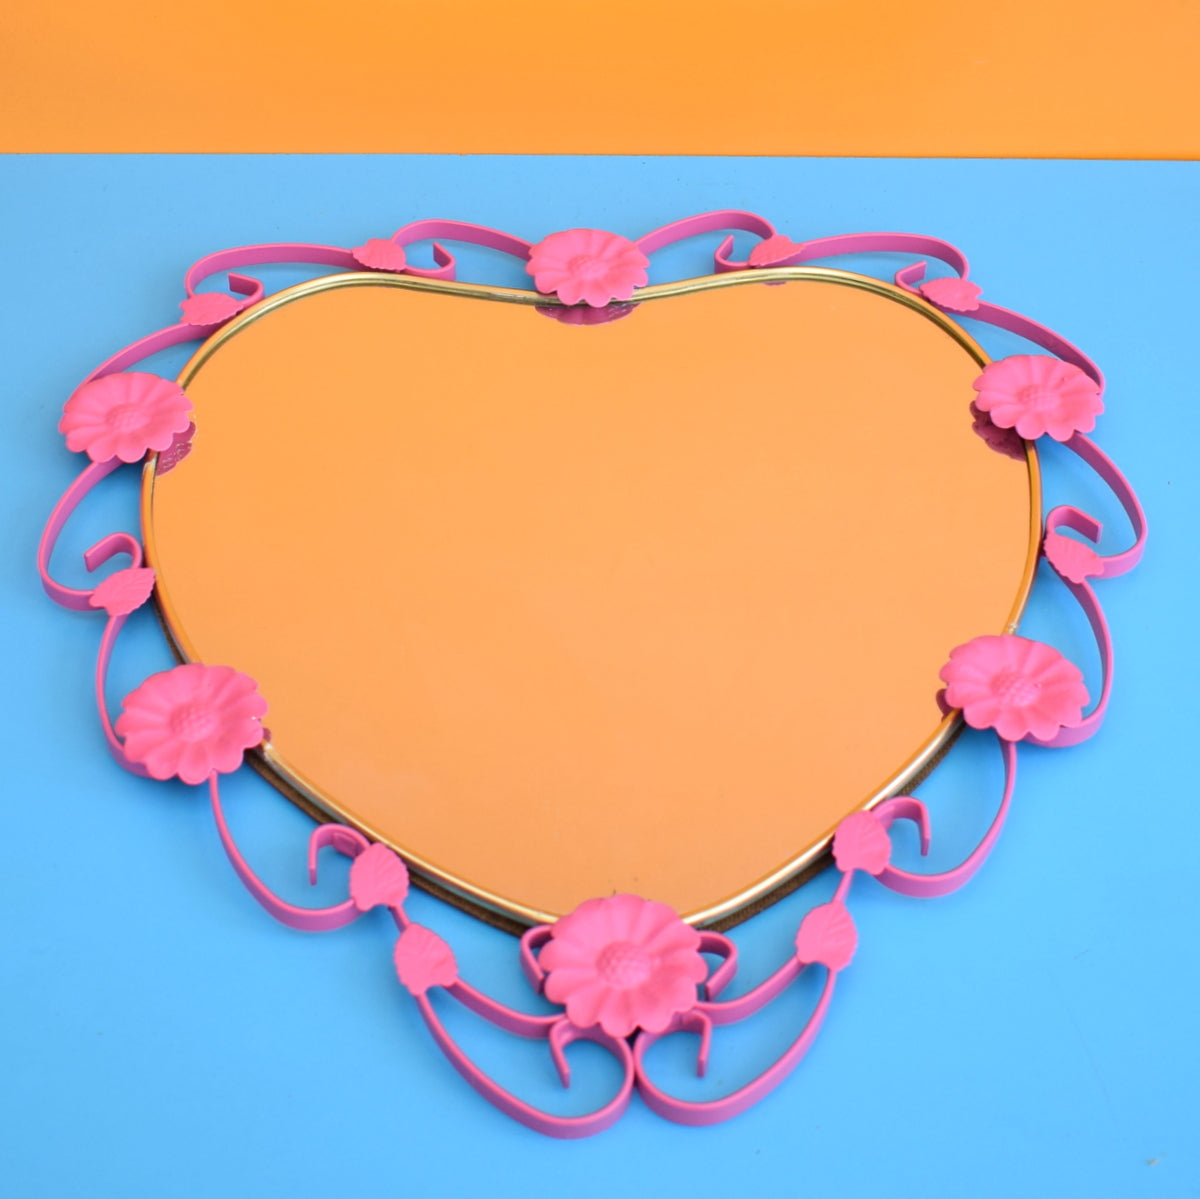 Vintage 1960s Heart Shaped Metal Mirror - Pink